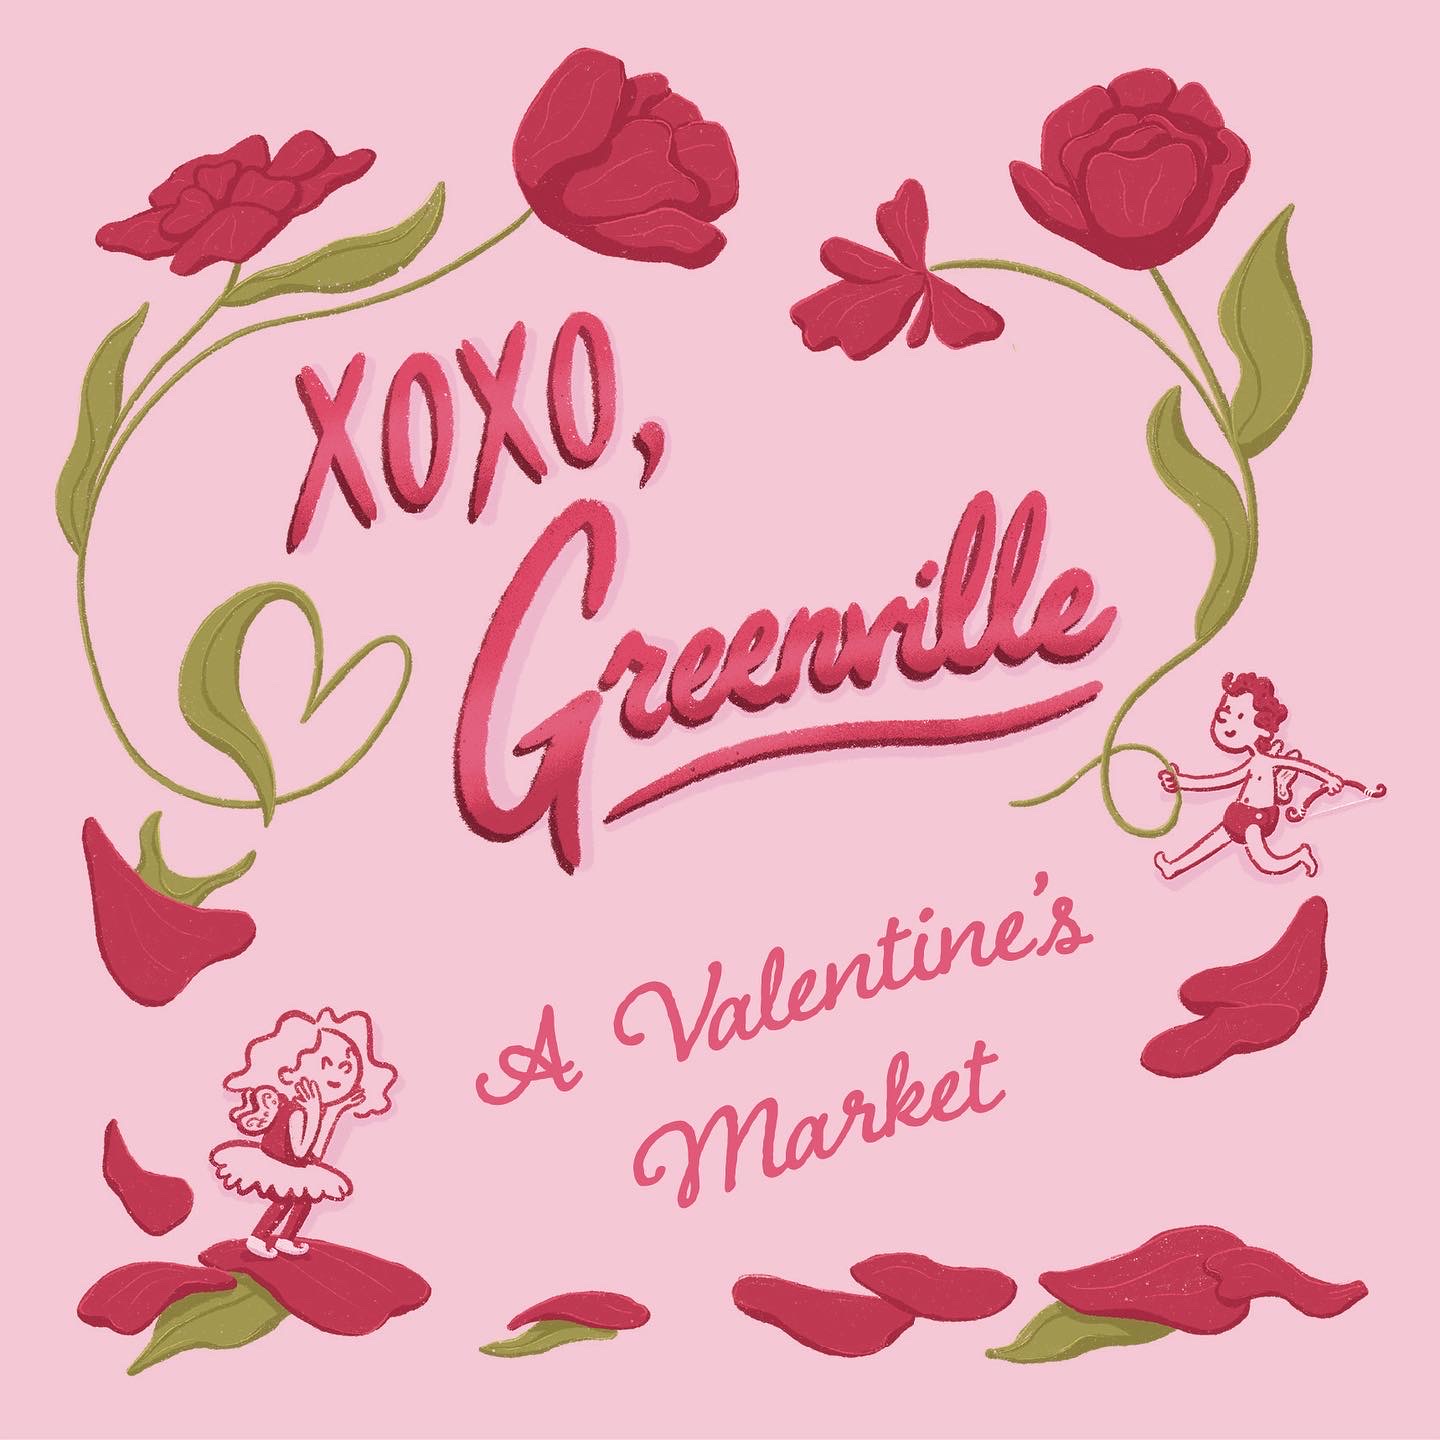 XOXO, Greenville: A Valentine’s Day Market